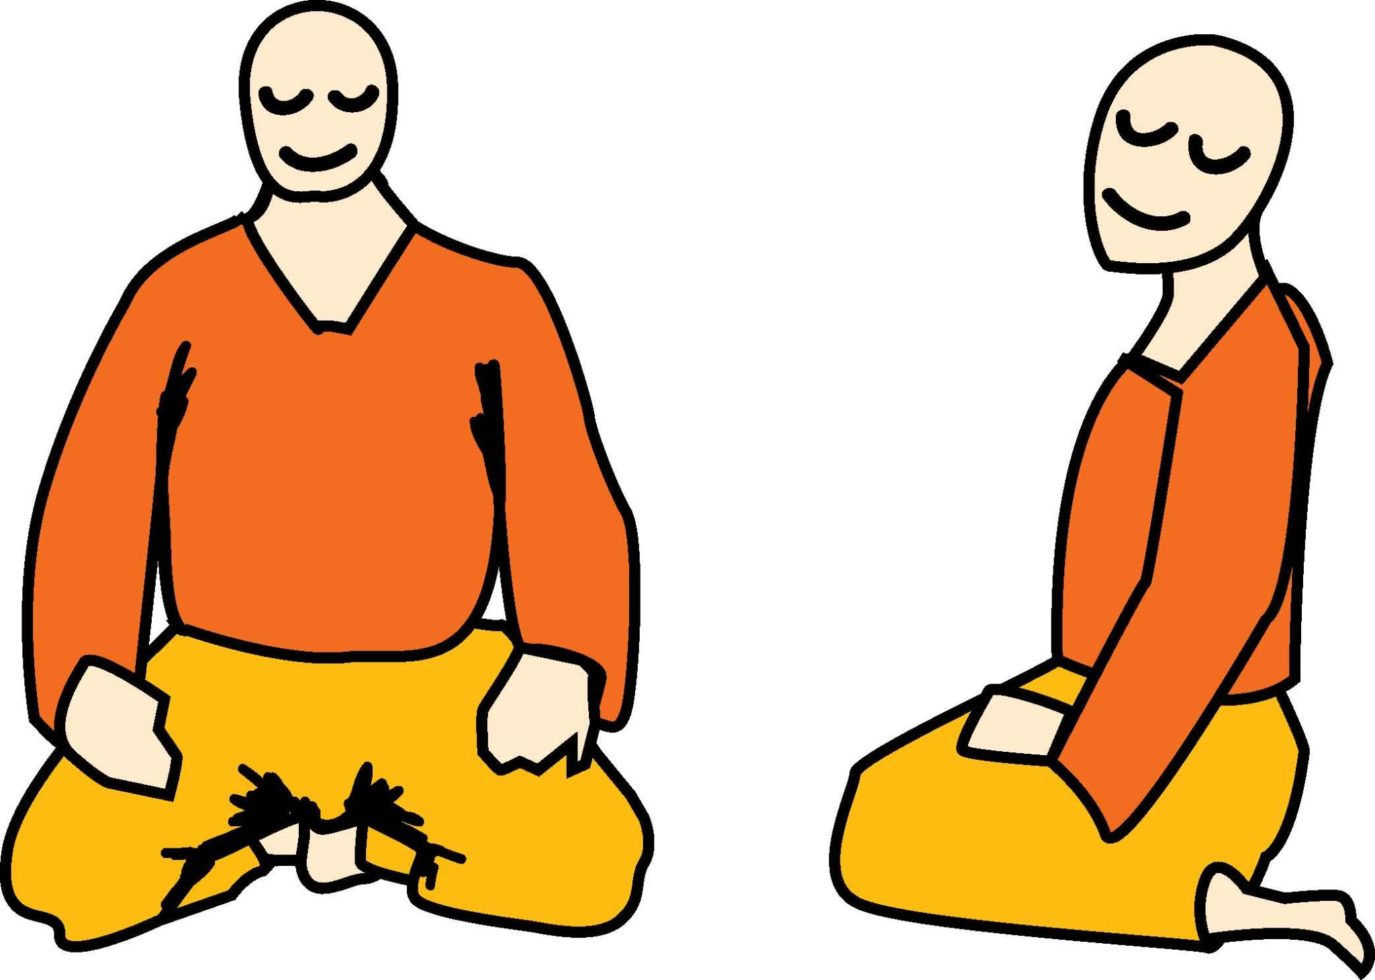 zazen meditation posture: Seiza